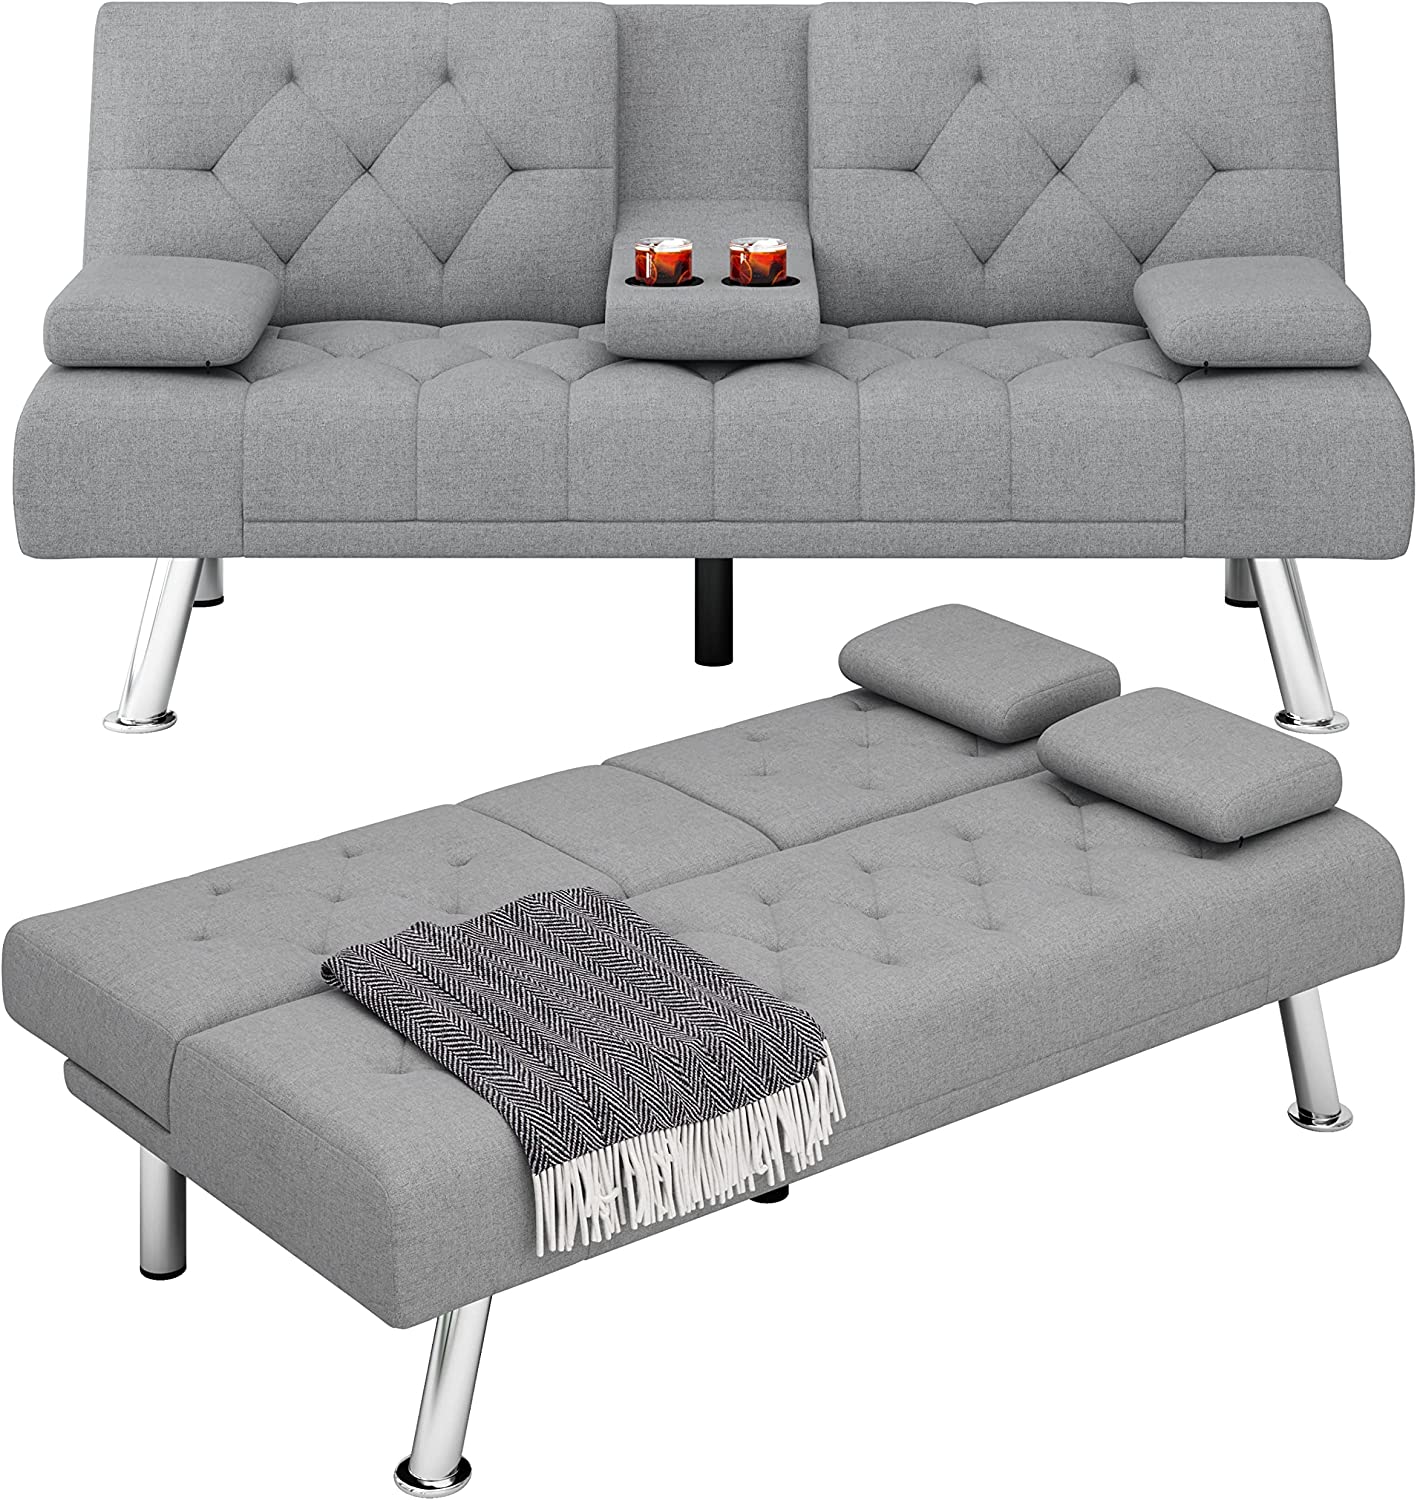 HIFIT Futon Sofa Bed, Upholstered Convertible Folding [...]